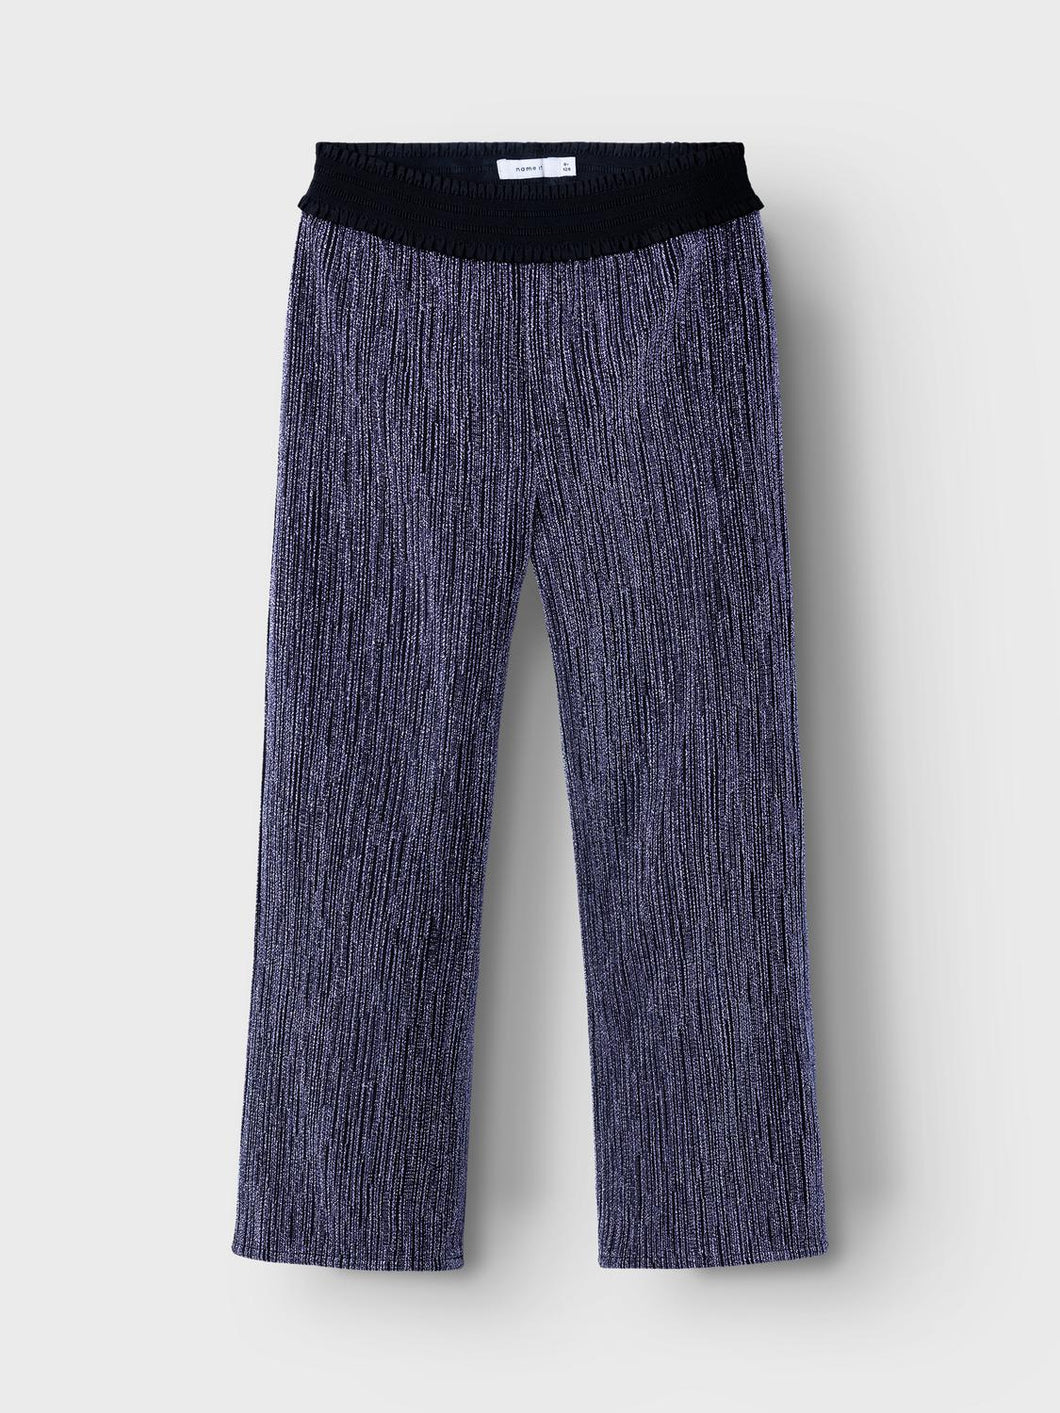 NKFRUNIC Trousers - Lavender Mist